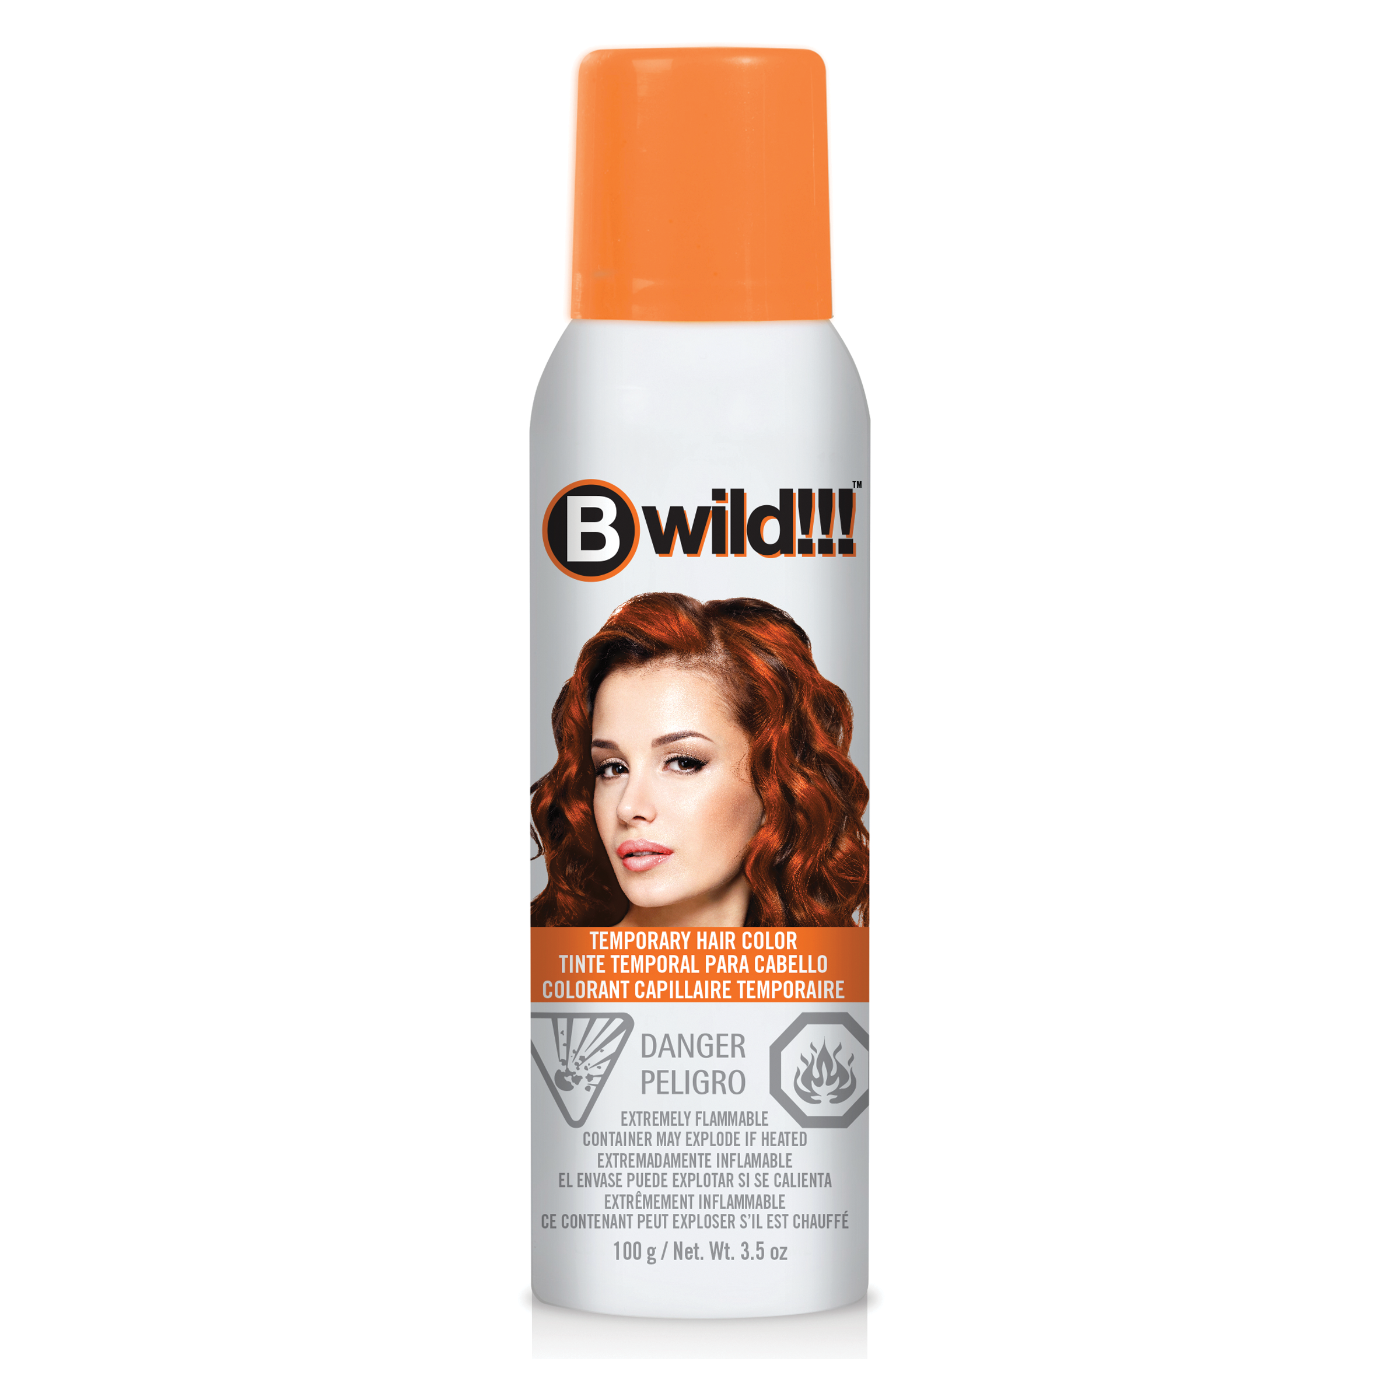 B Wild Temporary Hair Color Spray - Tiger Orange